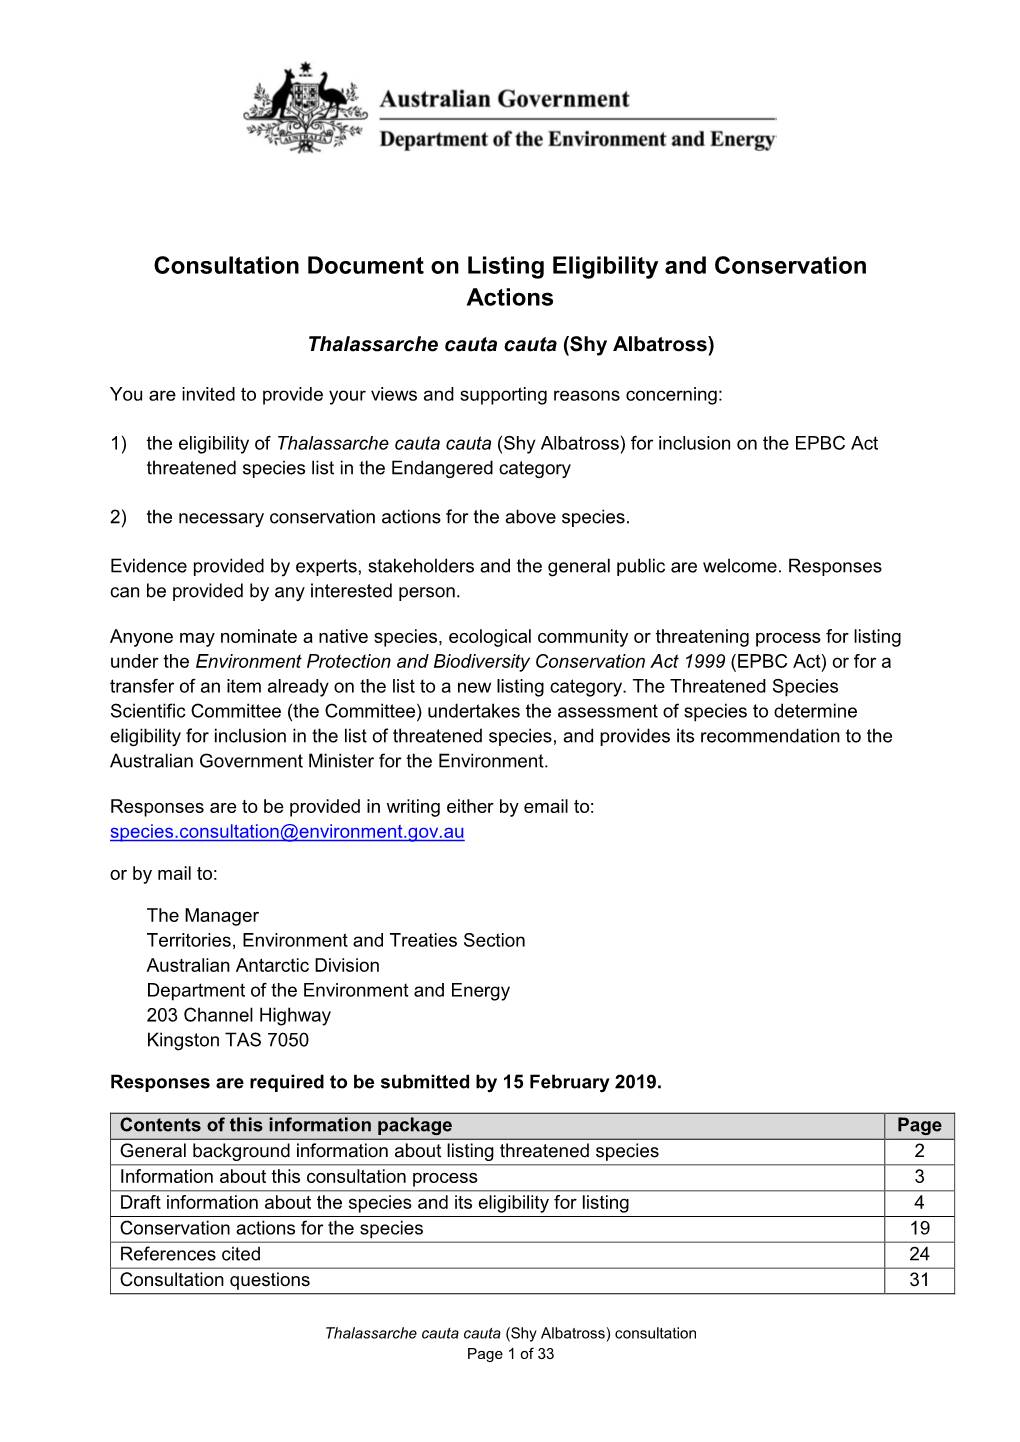 Consultation Document on Listing Eligibility and Conservation Actions Thalassarche Cauta Cauta (Shy Albatross)